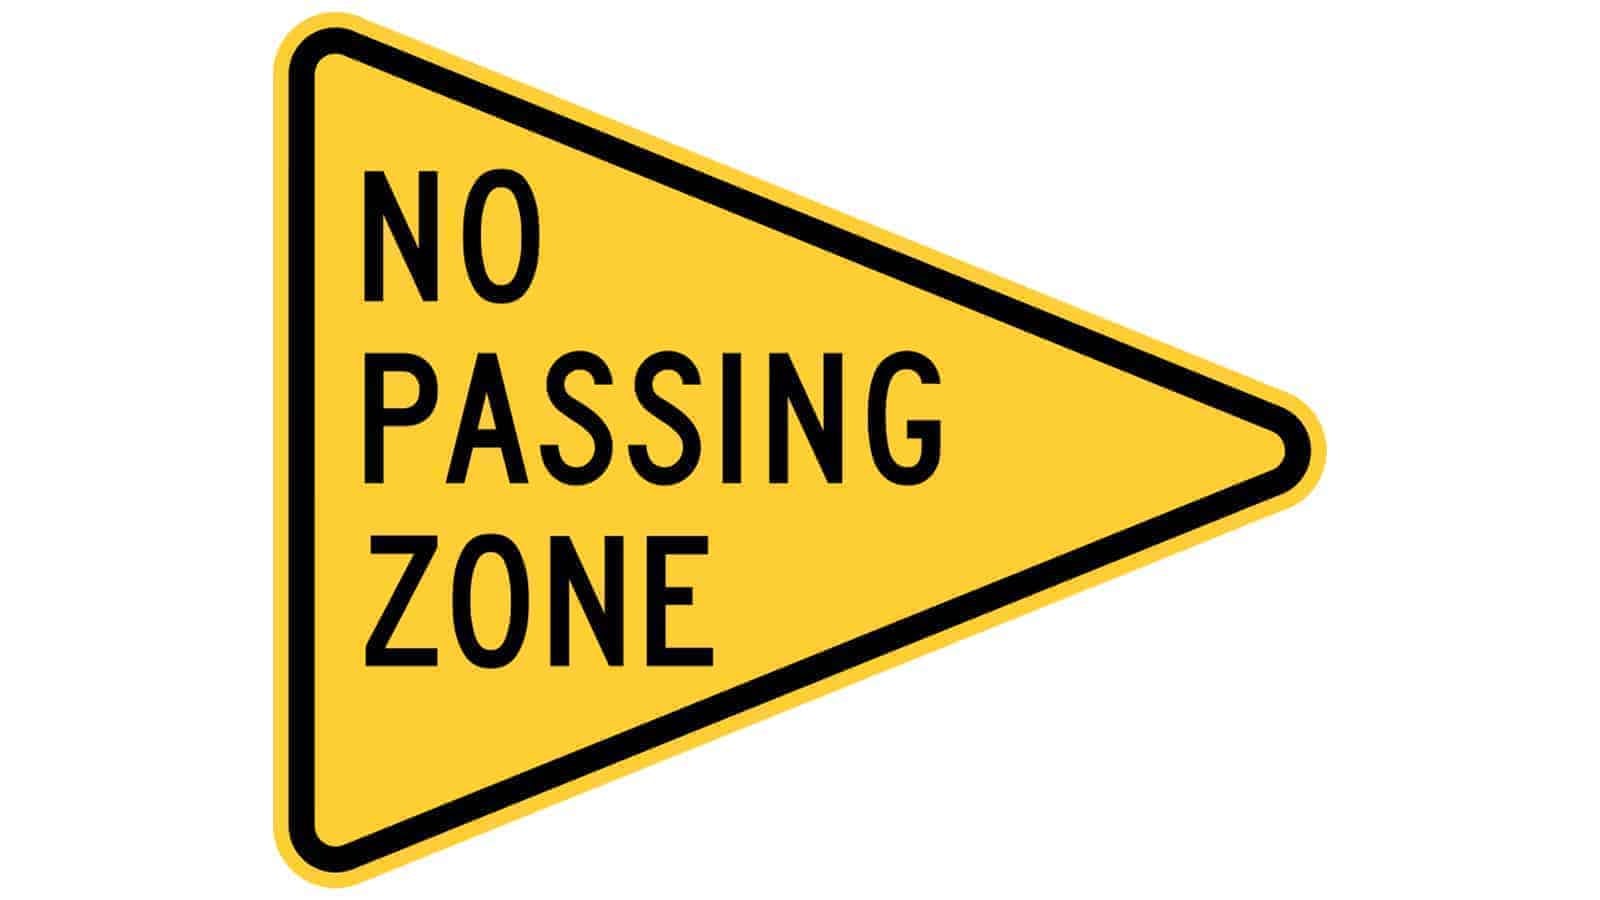 Warning sign No Passing Zone